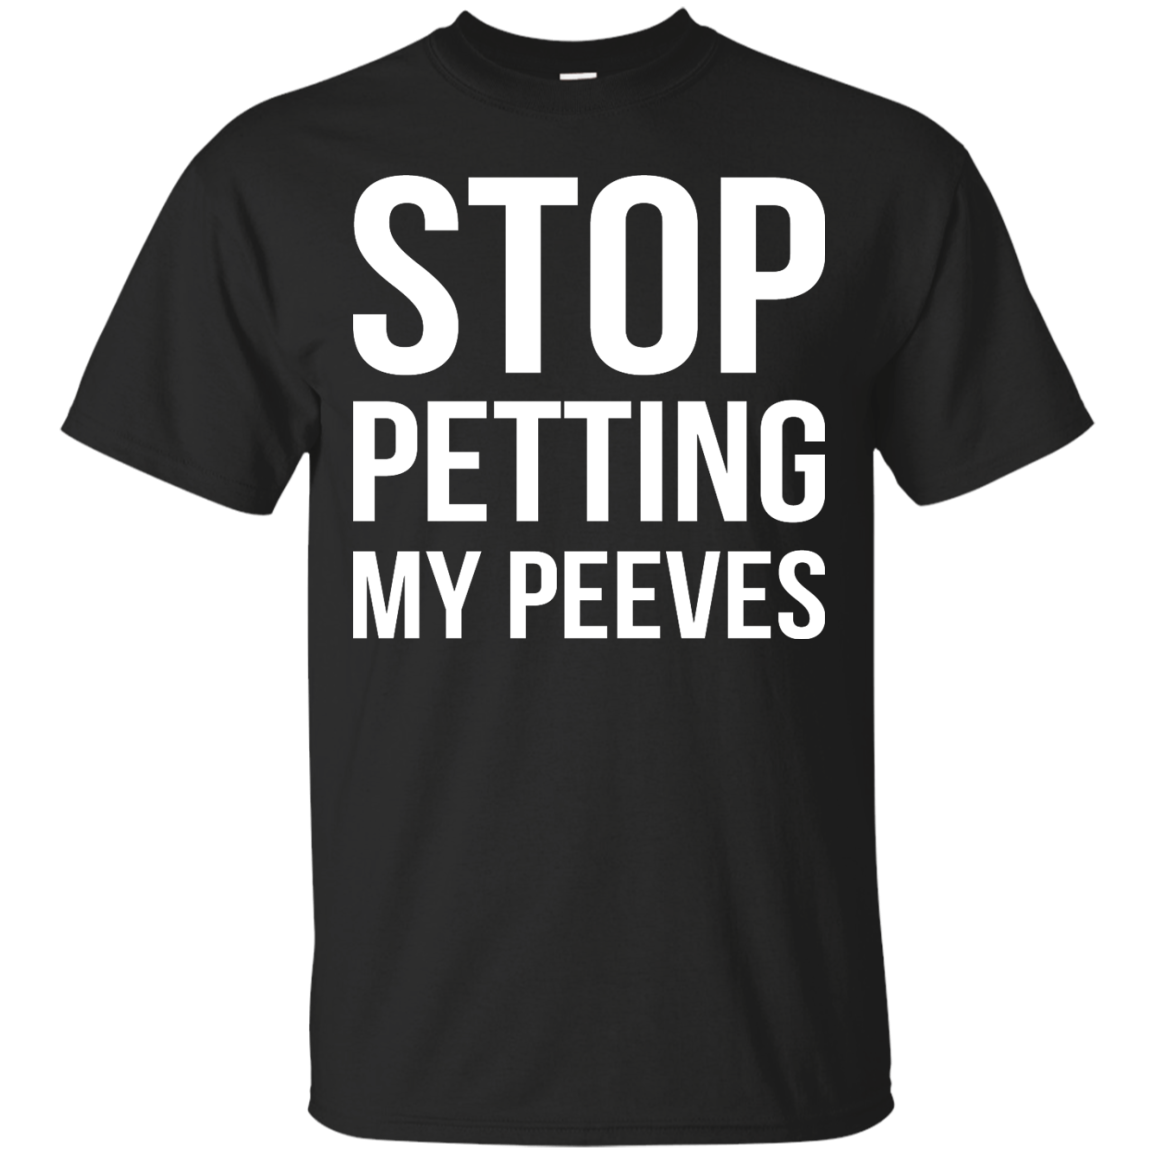 Stop Petting My Peeves shirt, sweater, tank